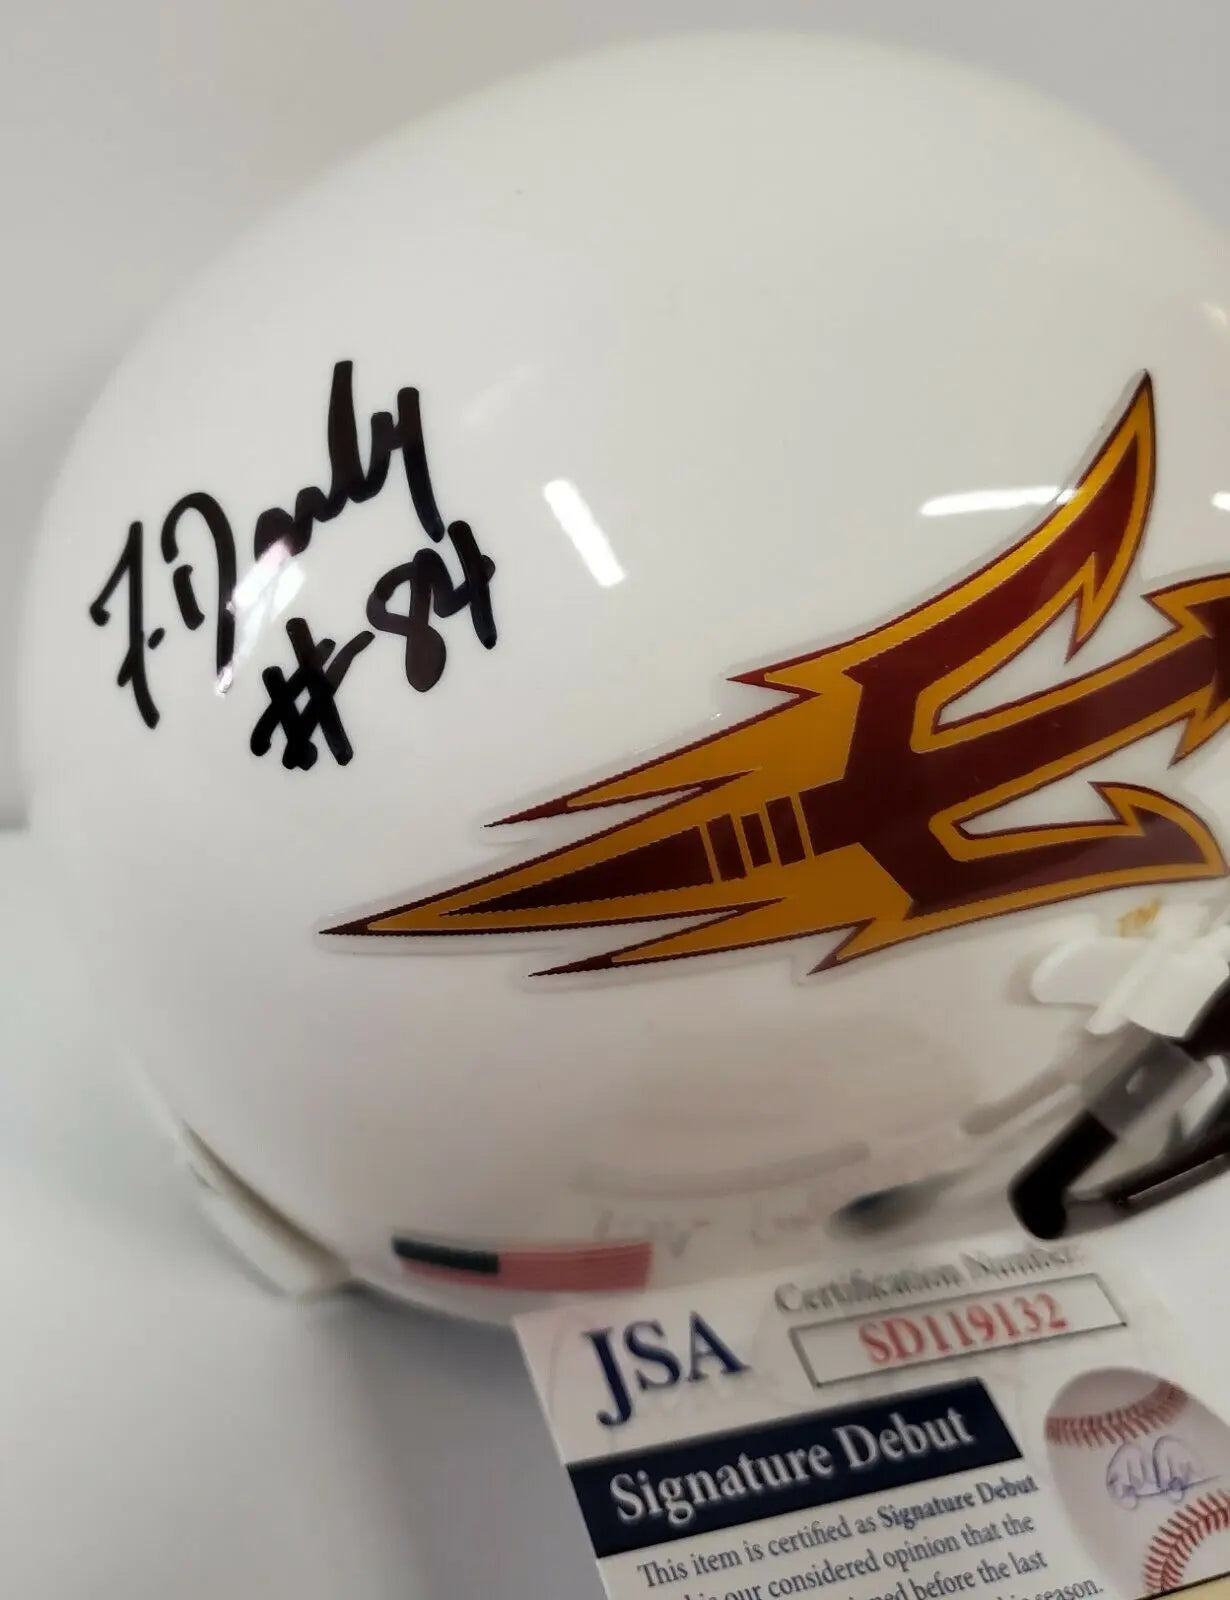 MVP Authentics Frank Darby Autographed Signed Arizona State Sun Devils Mini Helmet Jsa Coa 80.10 sports jersey framing , jersey framing